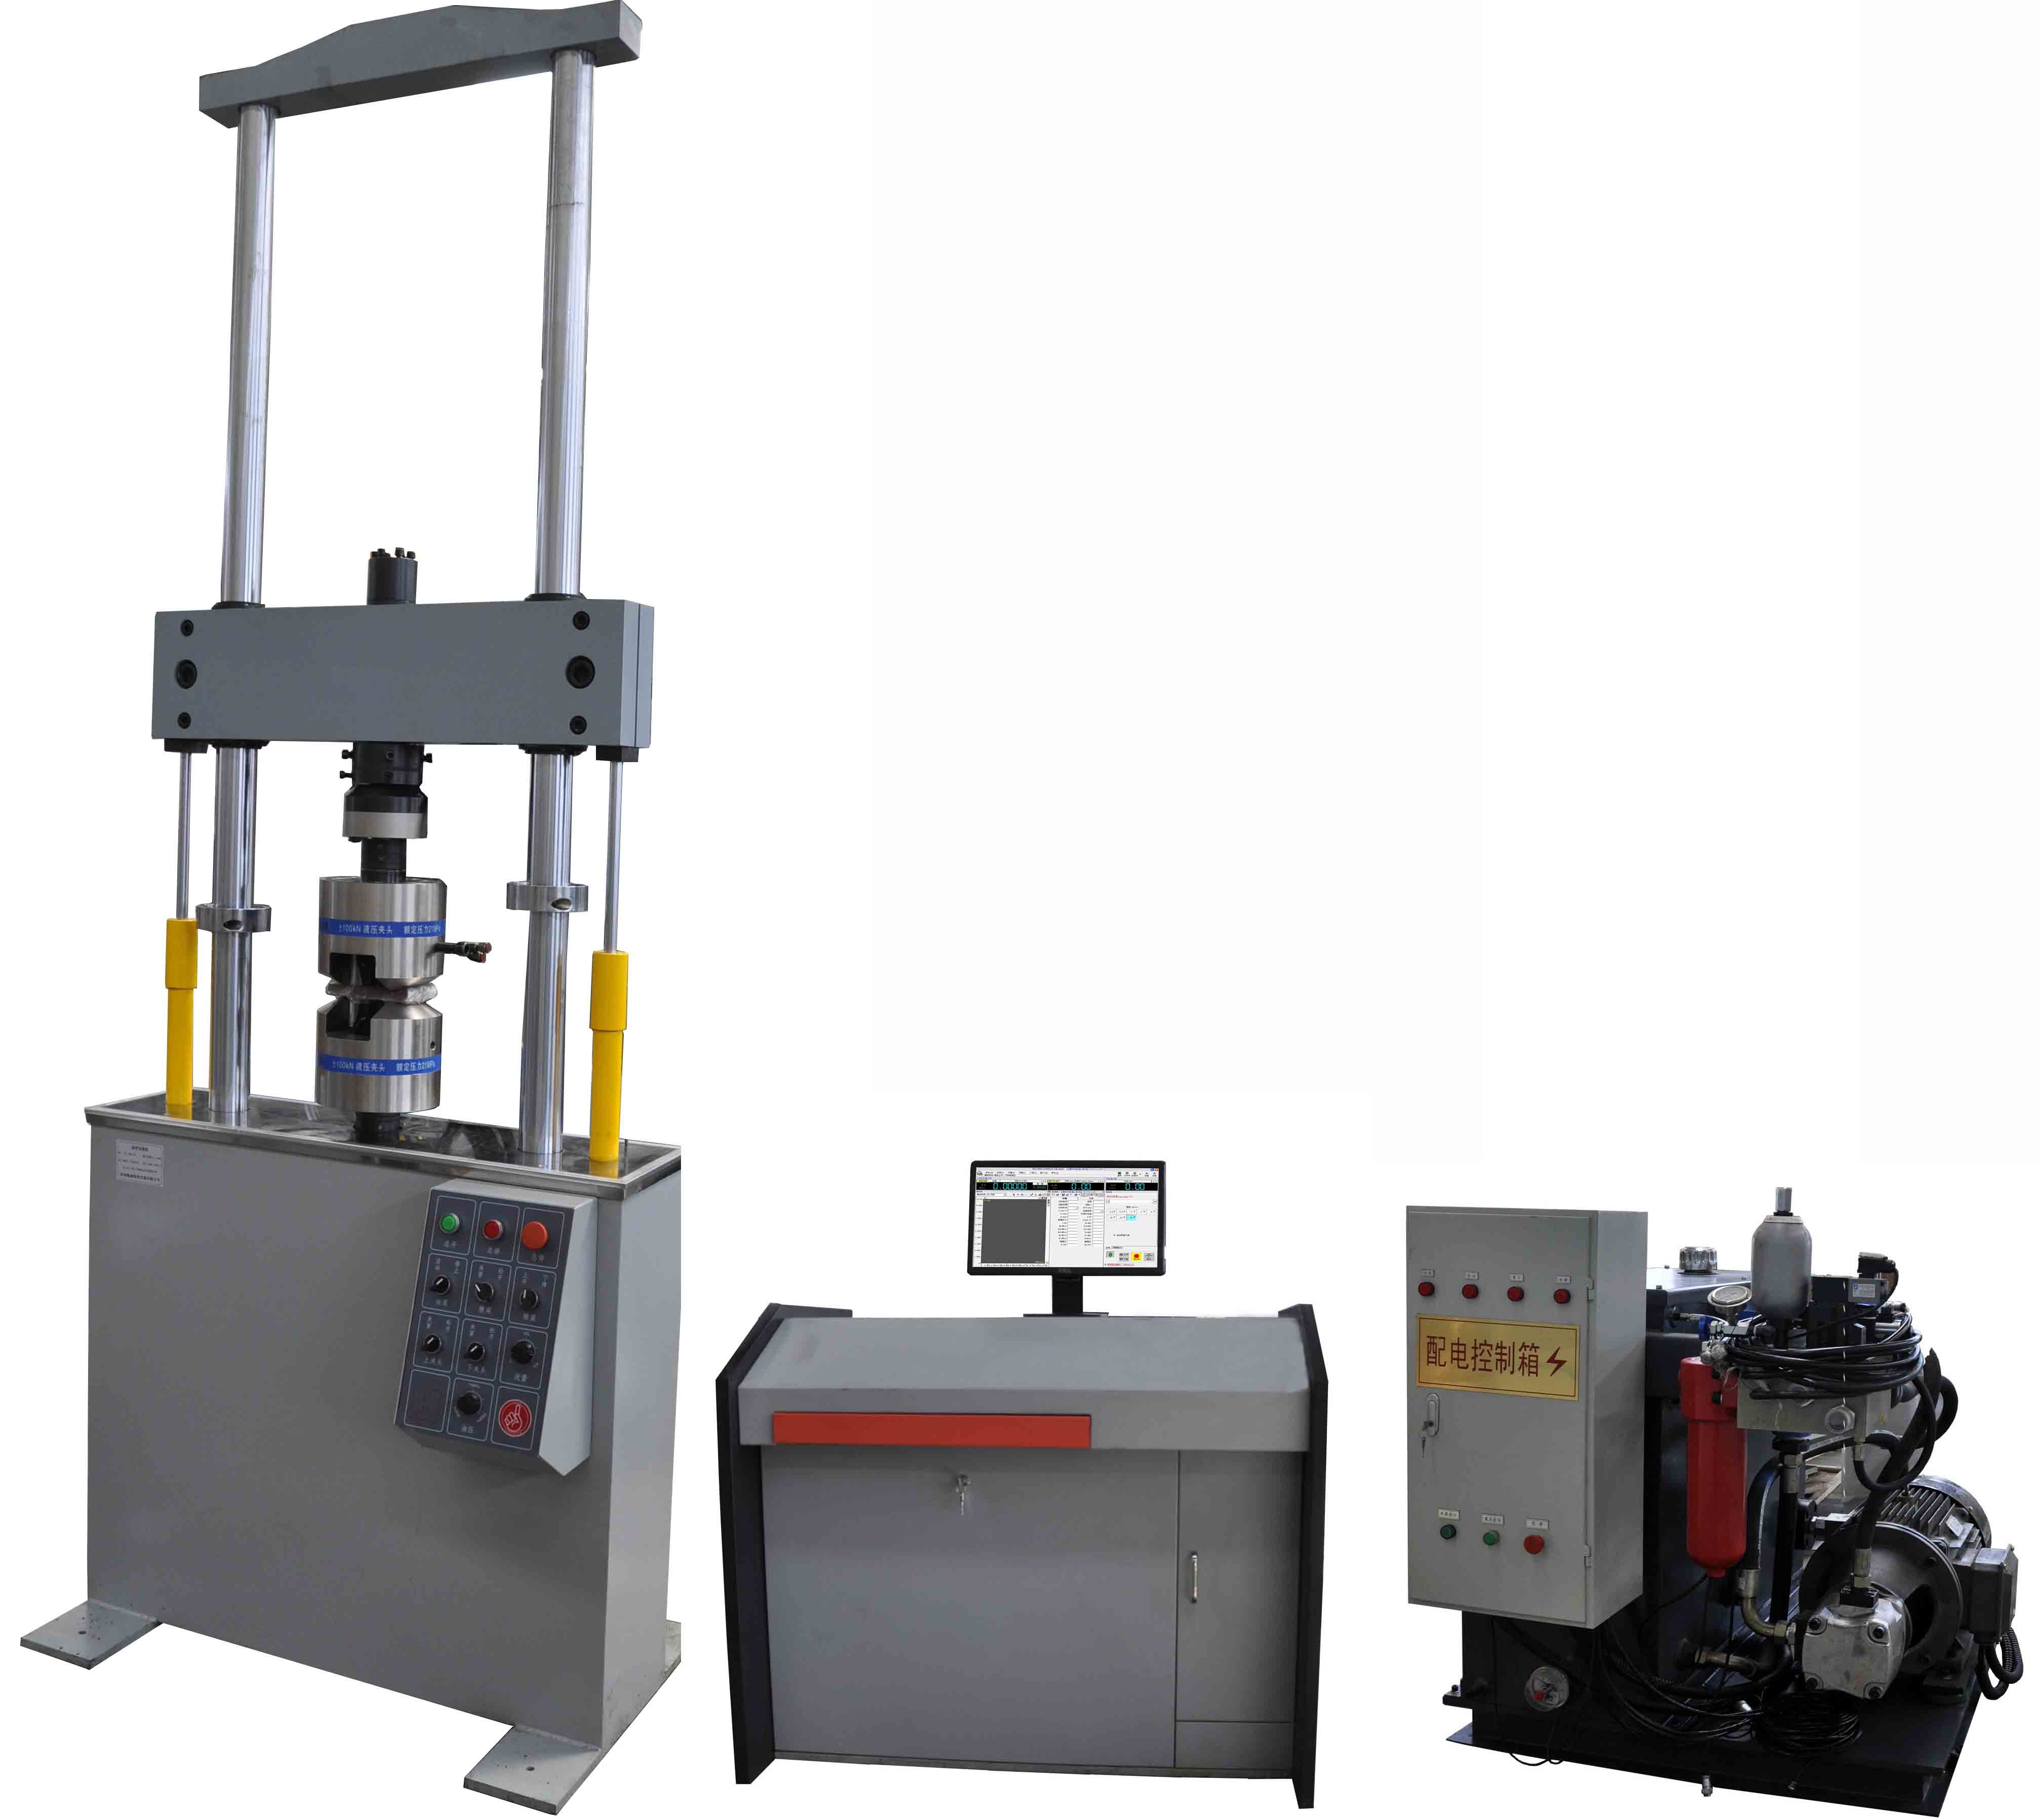 30 KN Servo Hydraulic Universal Testing Machine for Mechanical Properties Testing 750 mm